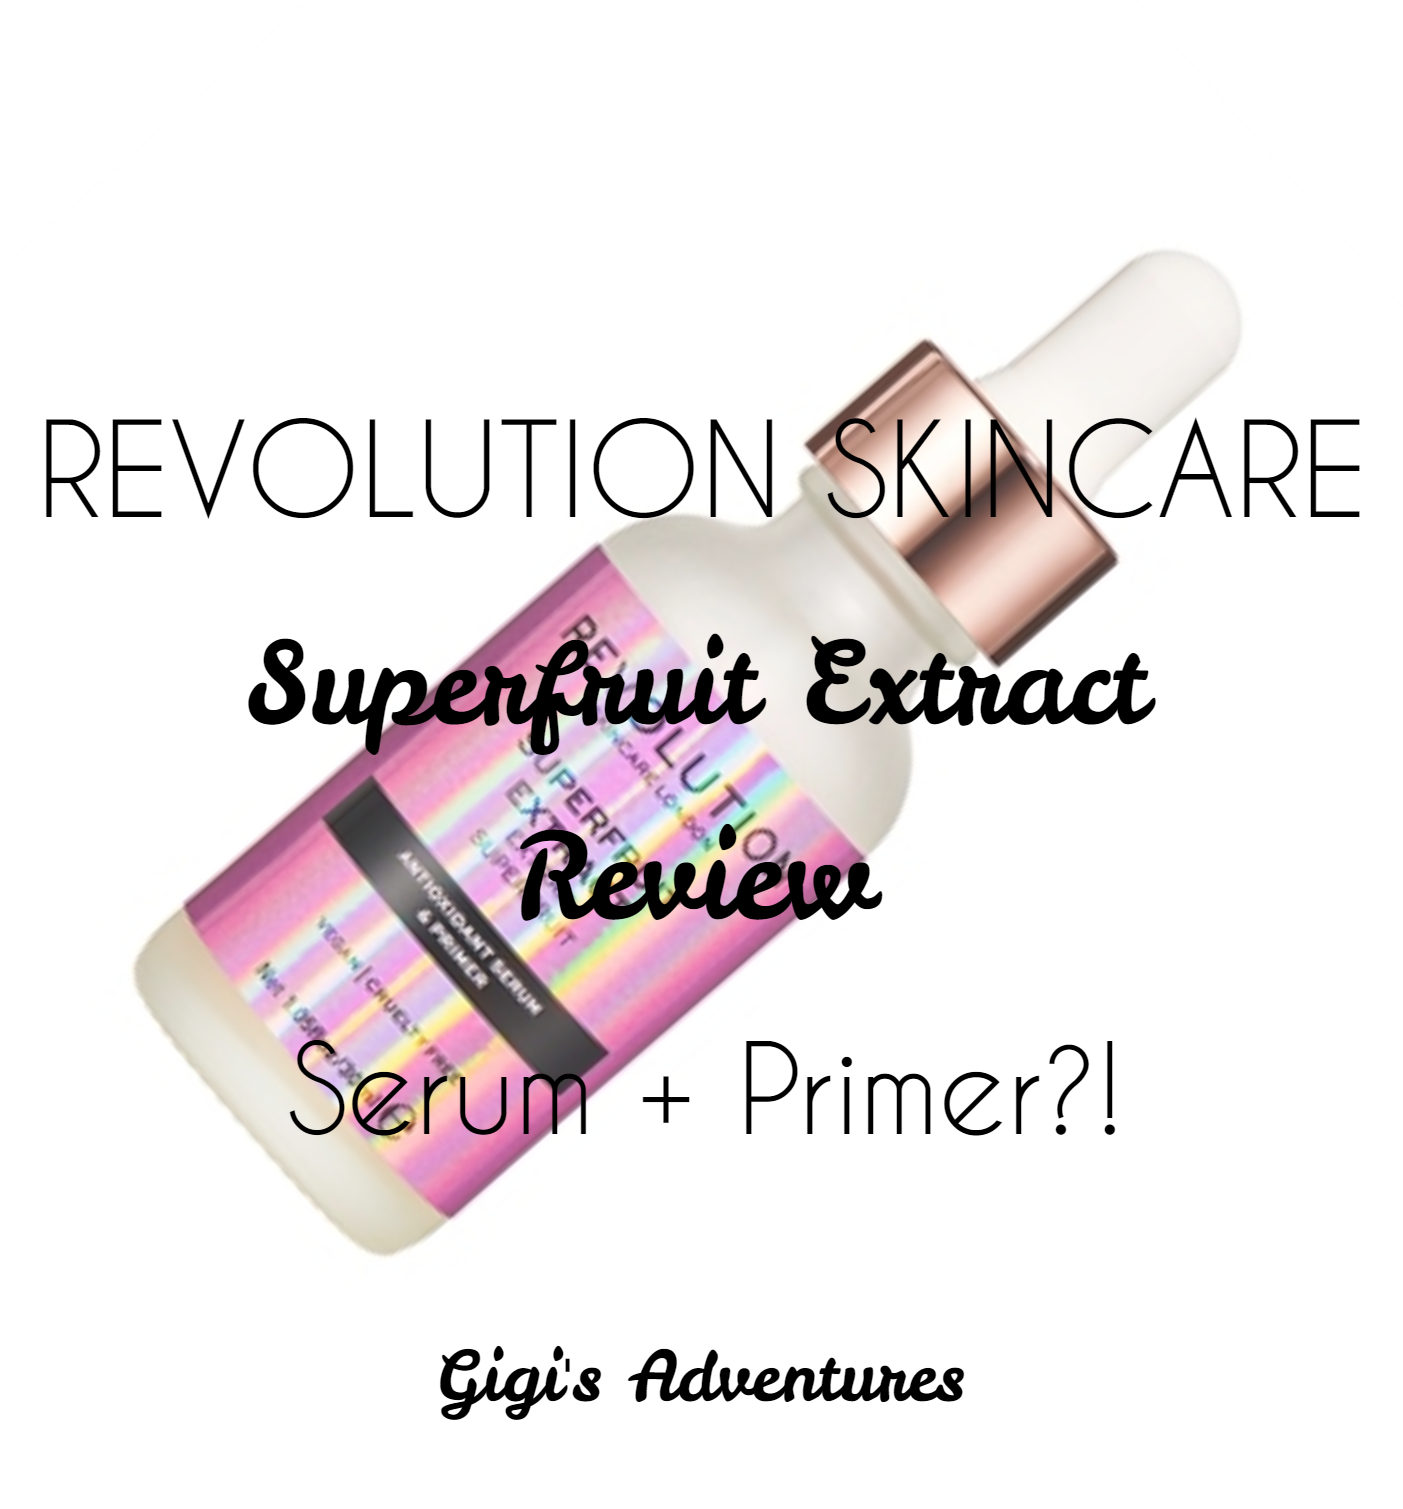 Revolution Superfruit Extract Review - Skincare + Primer?!